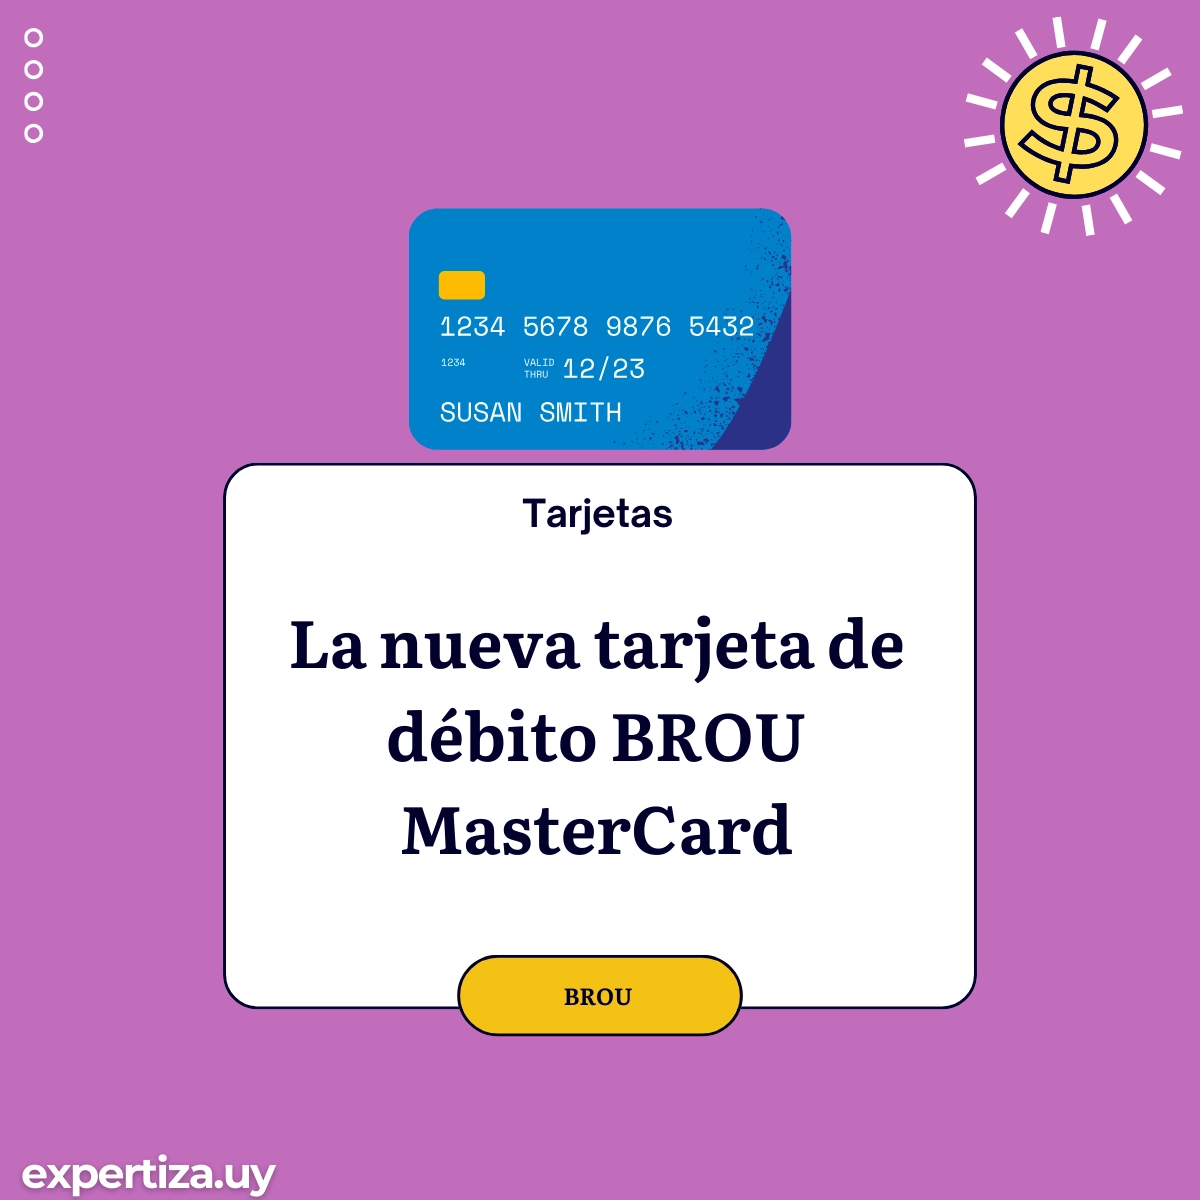 La nueva tarjeta de débito BROU MasterCard.